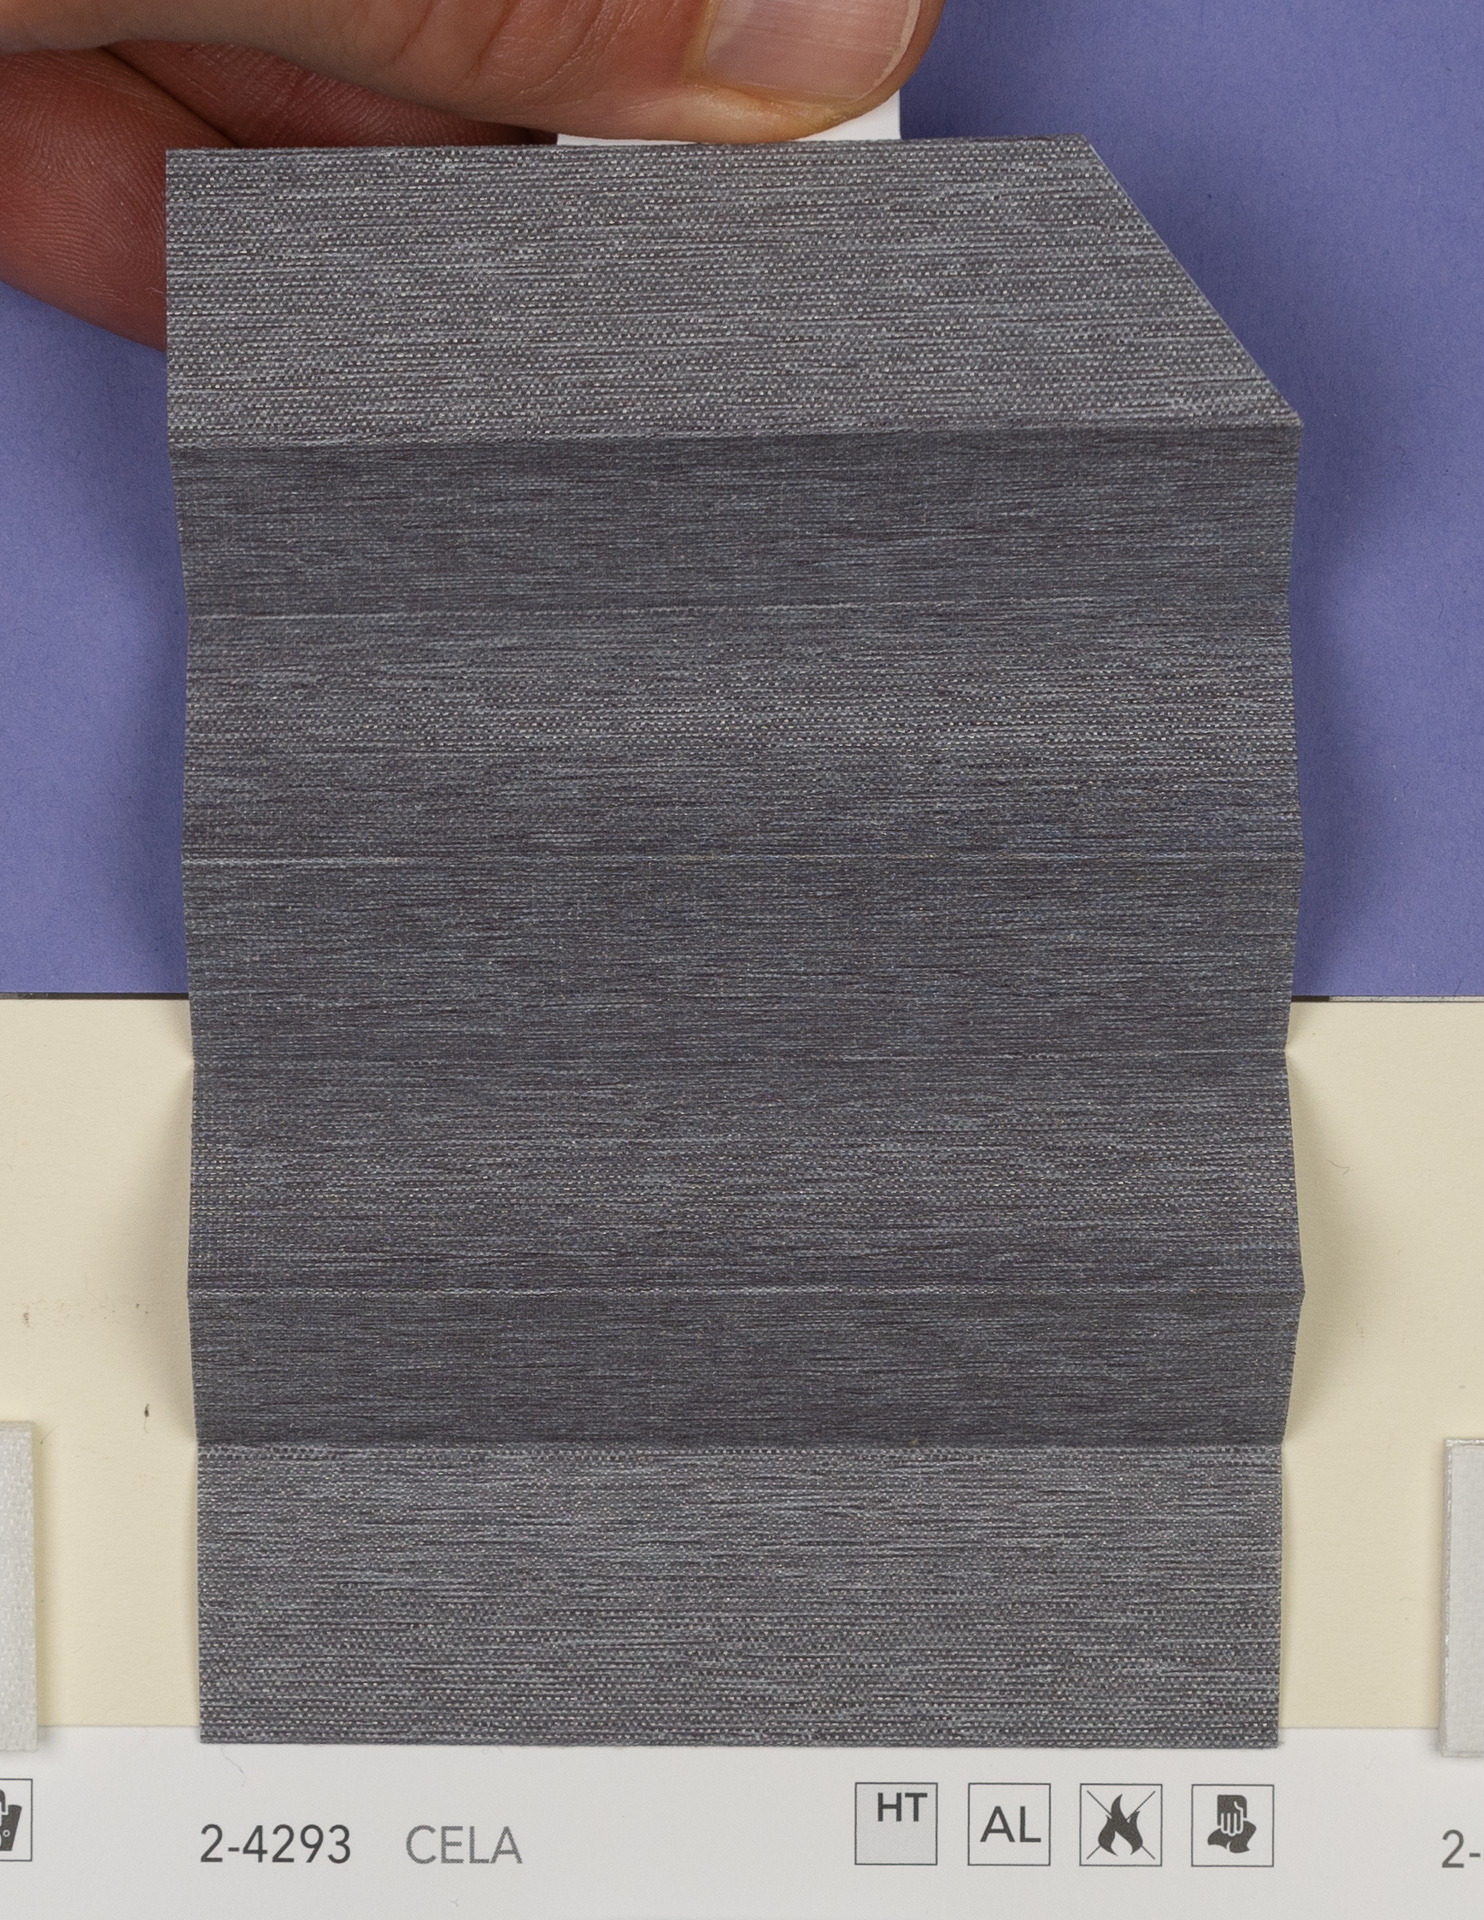 MHZ Plissee Stoff Muster aus der Farbkarte "19 Flame Retardant" | Material: 84 % PES Trevira CS / 16 % PES